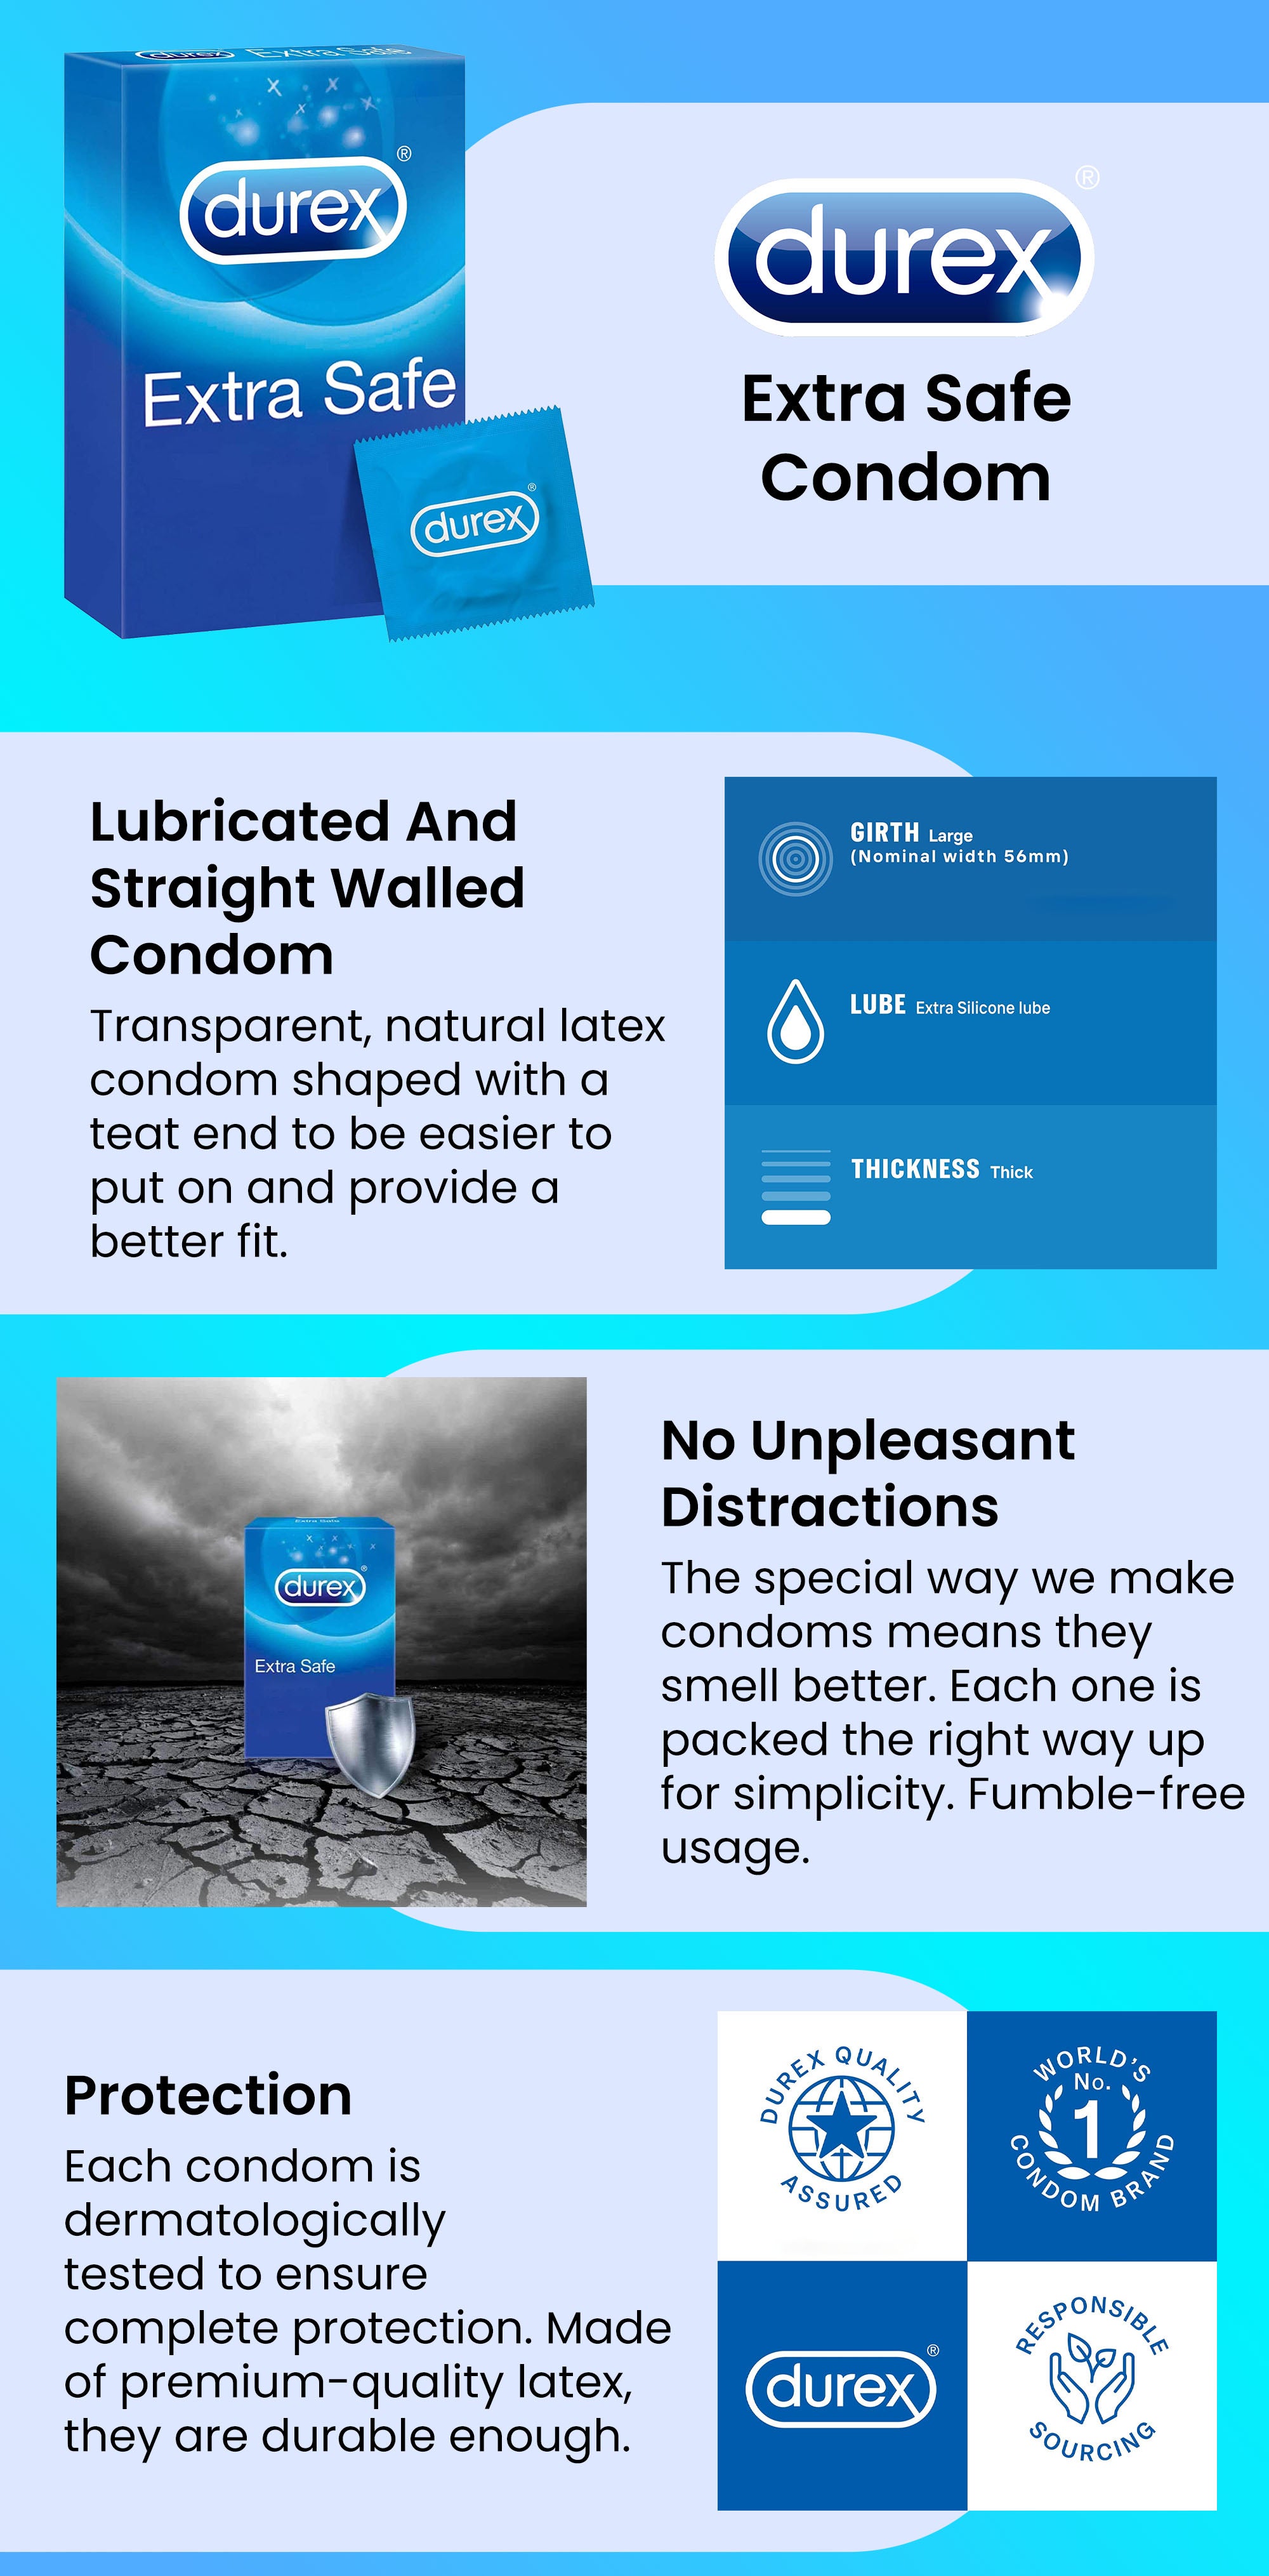 Durex Extra Safe Condoms, Buy Condoms Online, Extra Safe Protection, Reliable Contraception, Premium Quality Condoms in Pakistan